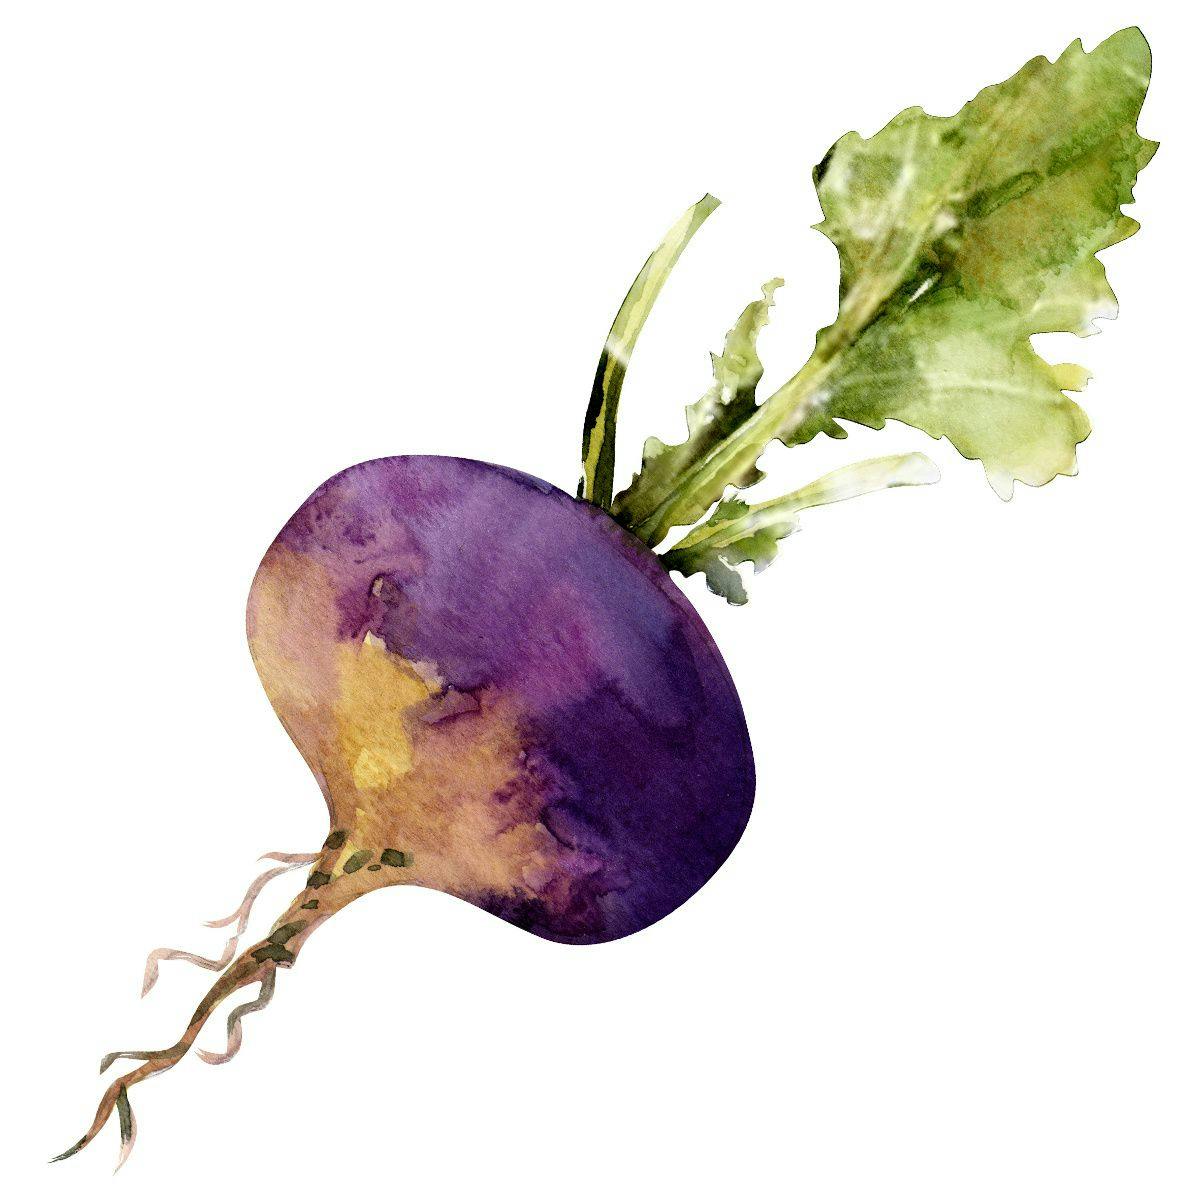 watercolor illustration of turnip